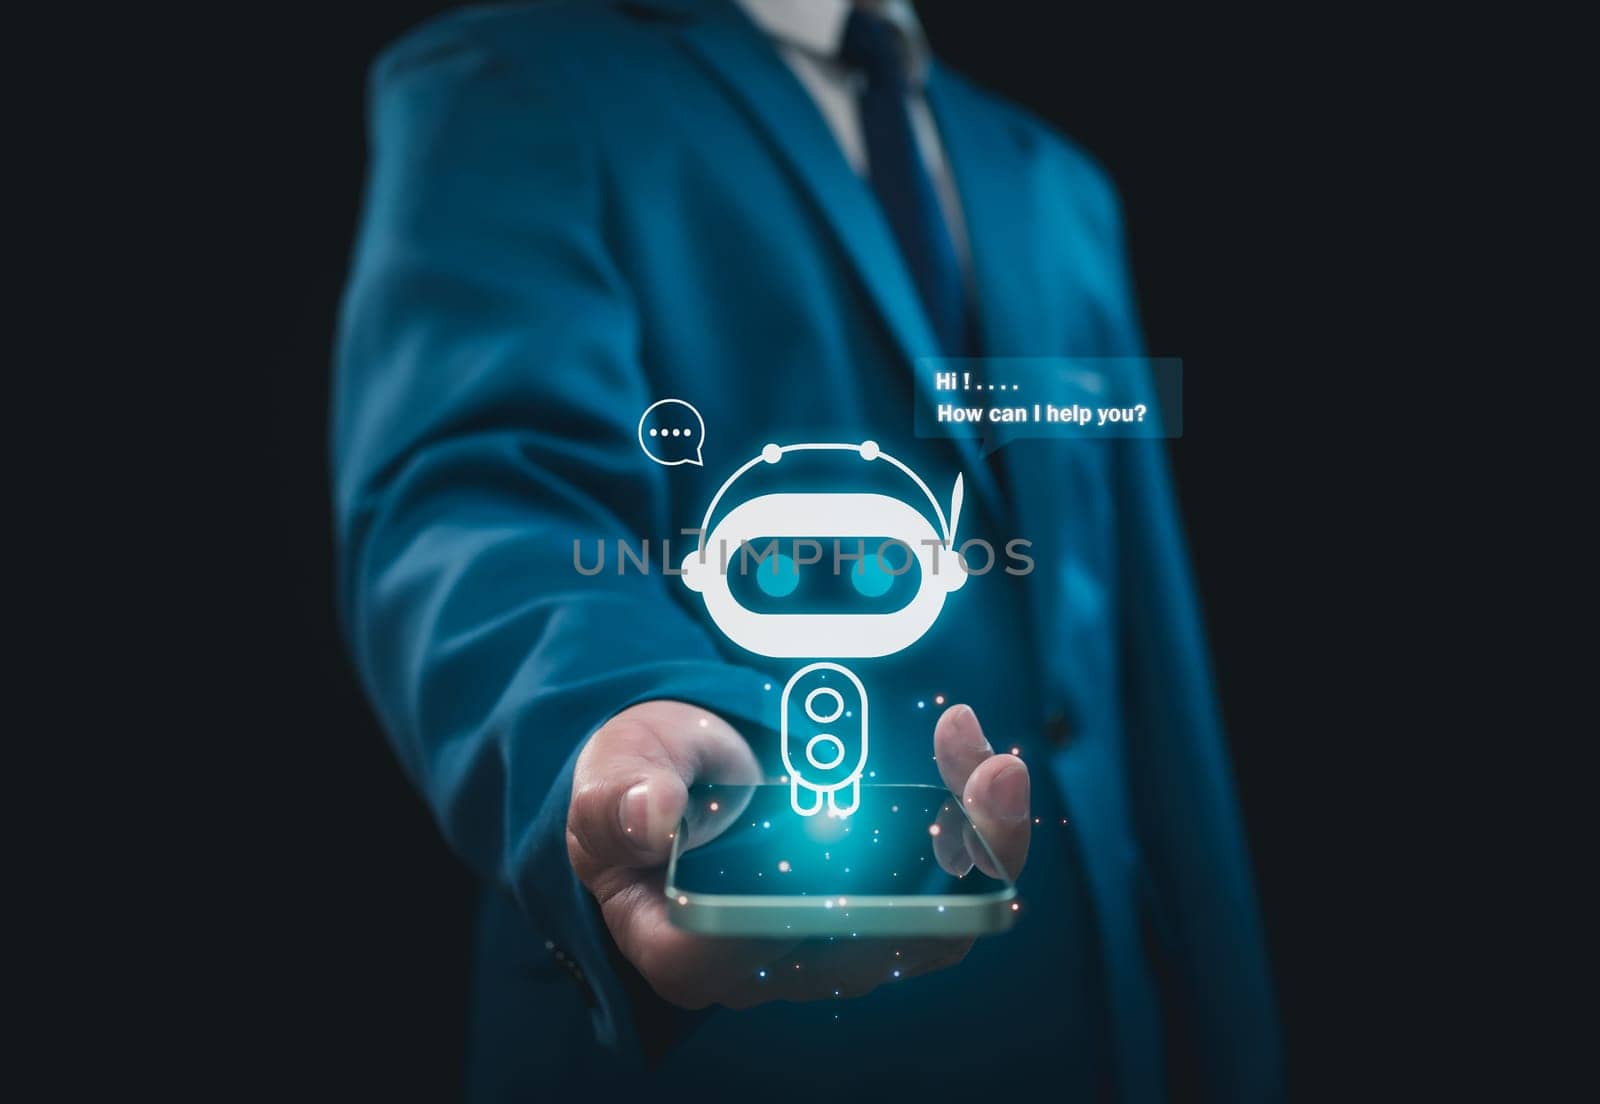 Businessman holding hologram digital chatbot, robot application, conversation assistant, AI Artificial Intelligence concept, digital chatbot on virtual screen.Technology concept.